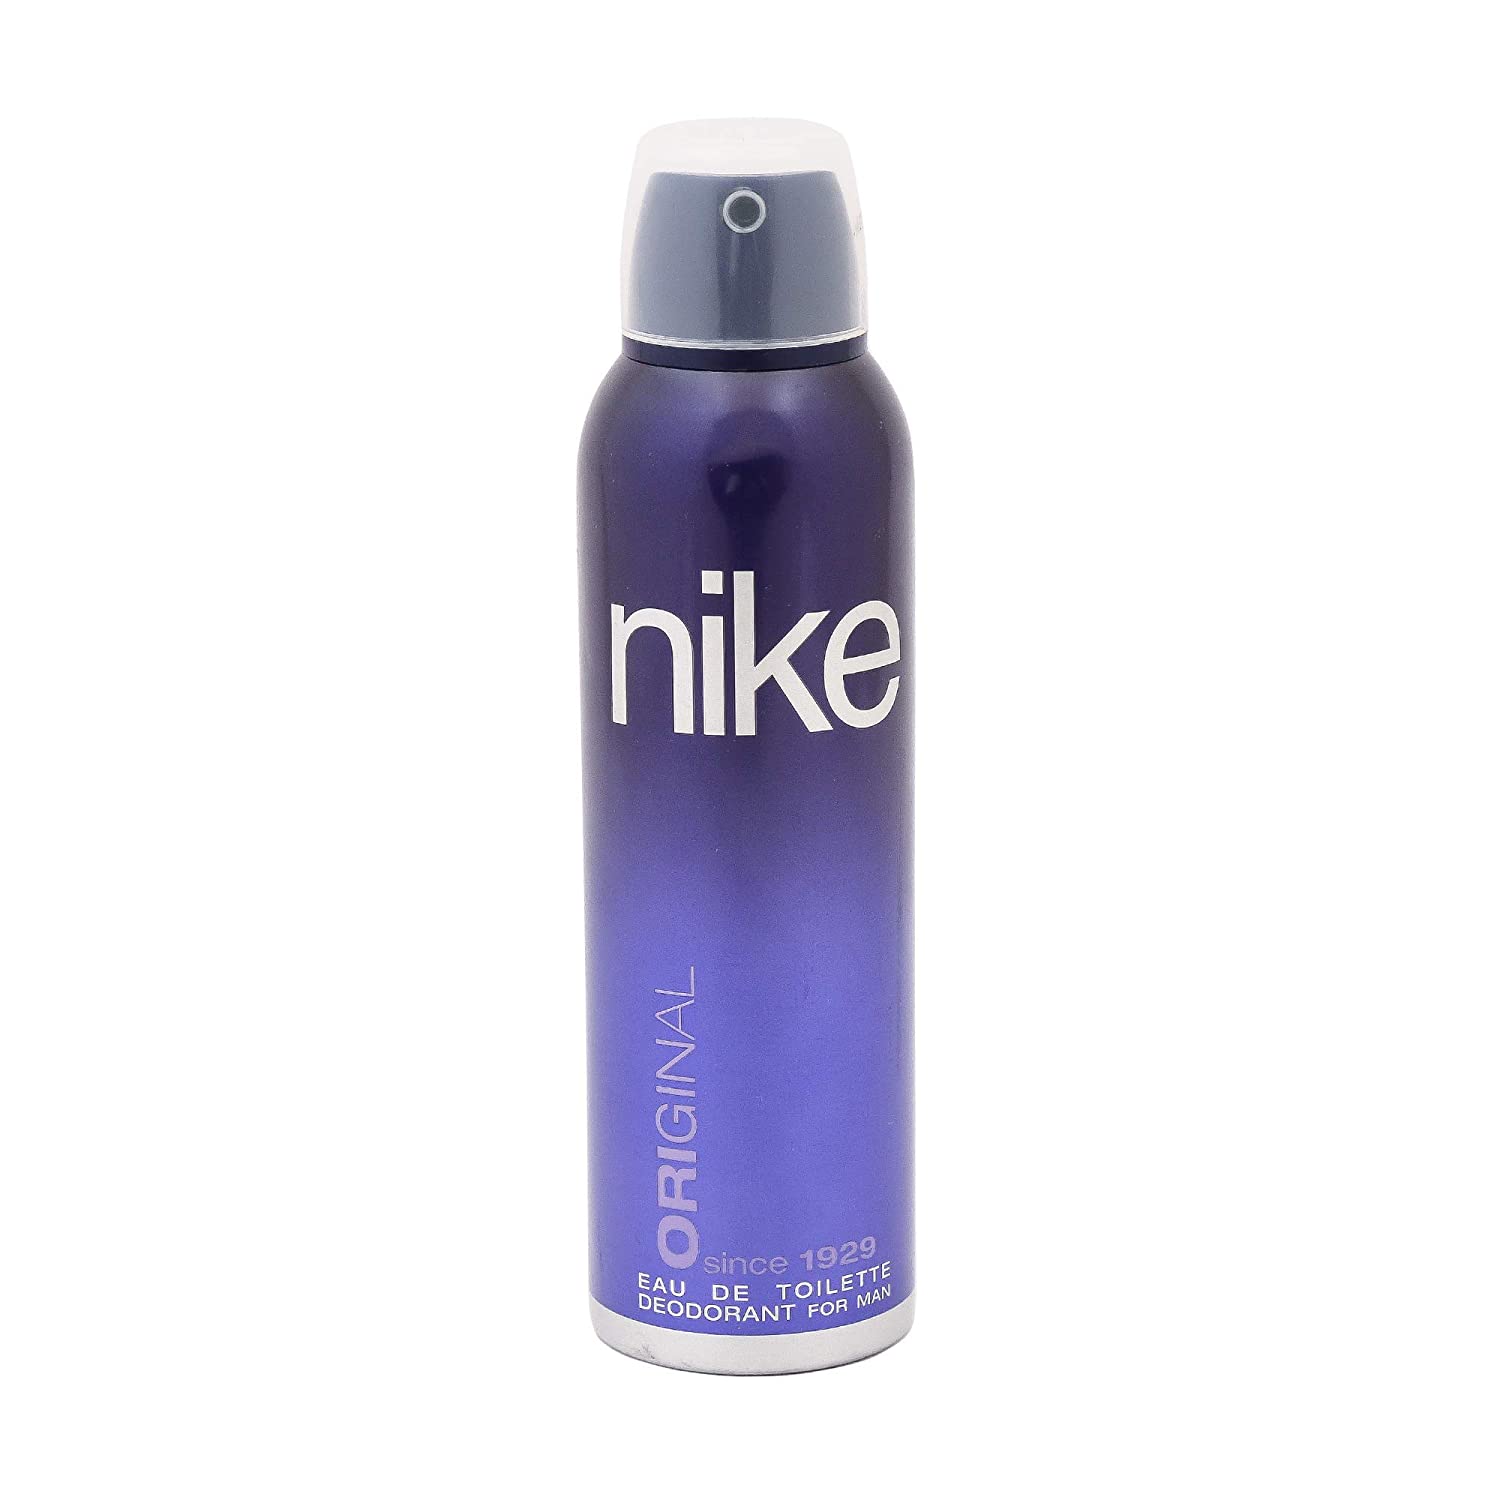 Knorretje Grondwet uitspraak Nike Original Deodorant Spray - For Men (150 ml) - Arpan General Stores